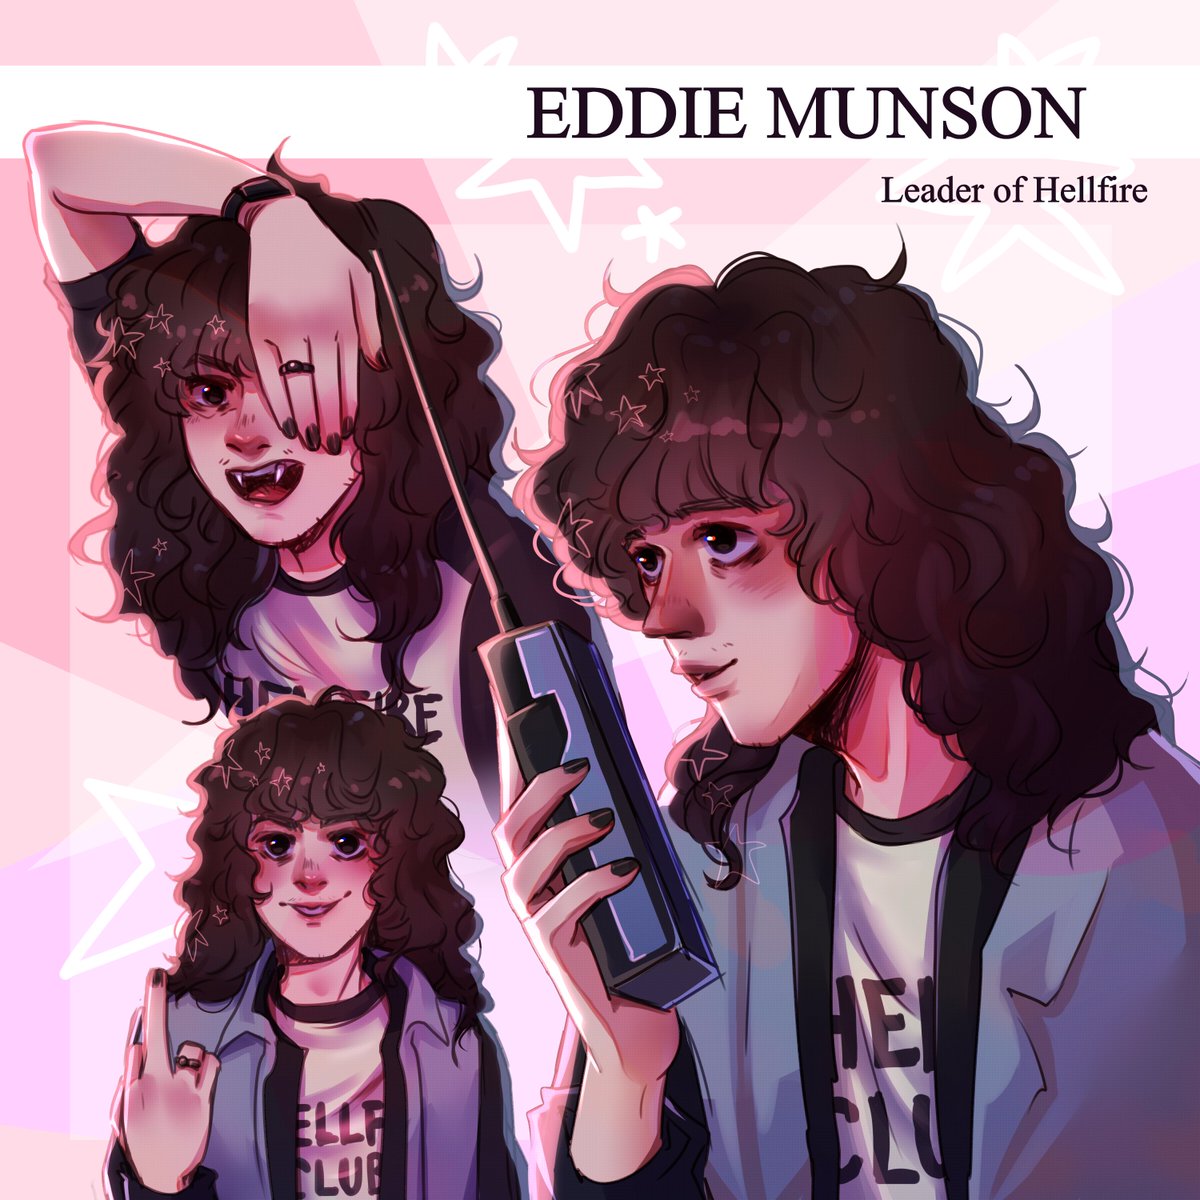 Eddie Munson - The Leader of Hellfire
I hope all of you had a great week :) 
#EDDIEMUNSON #strangerthingsfanart